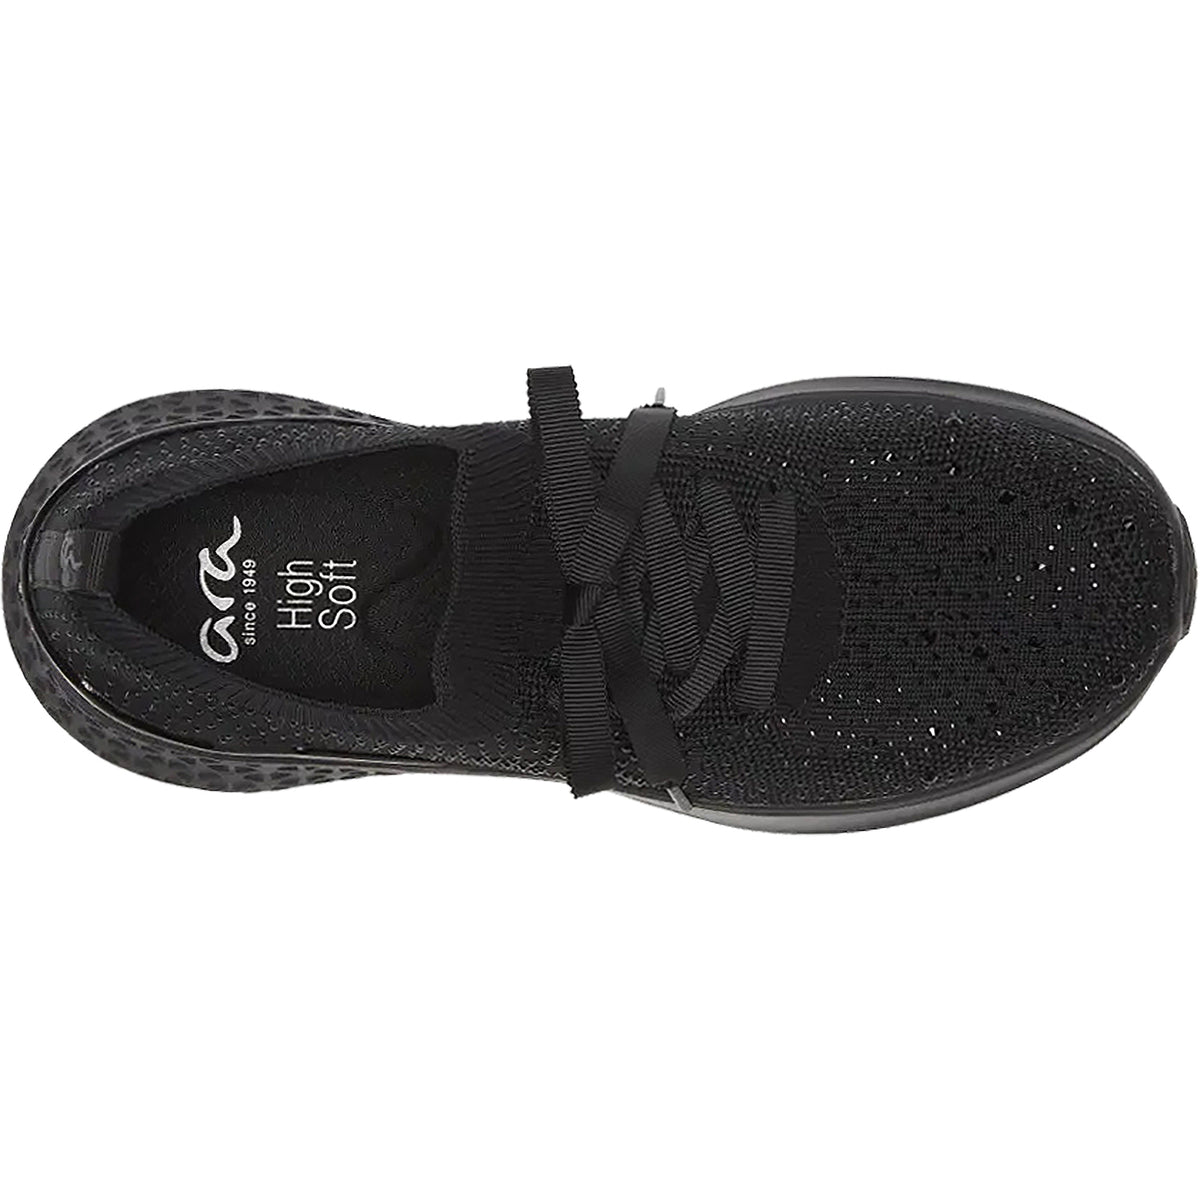 Monticello Women's Slip-On Sneakers | Footwear etc.